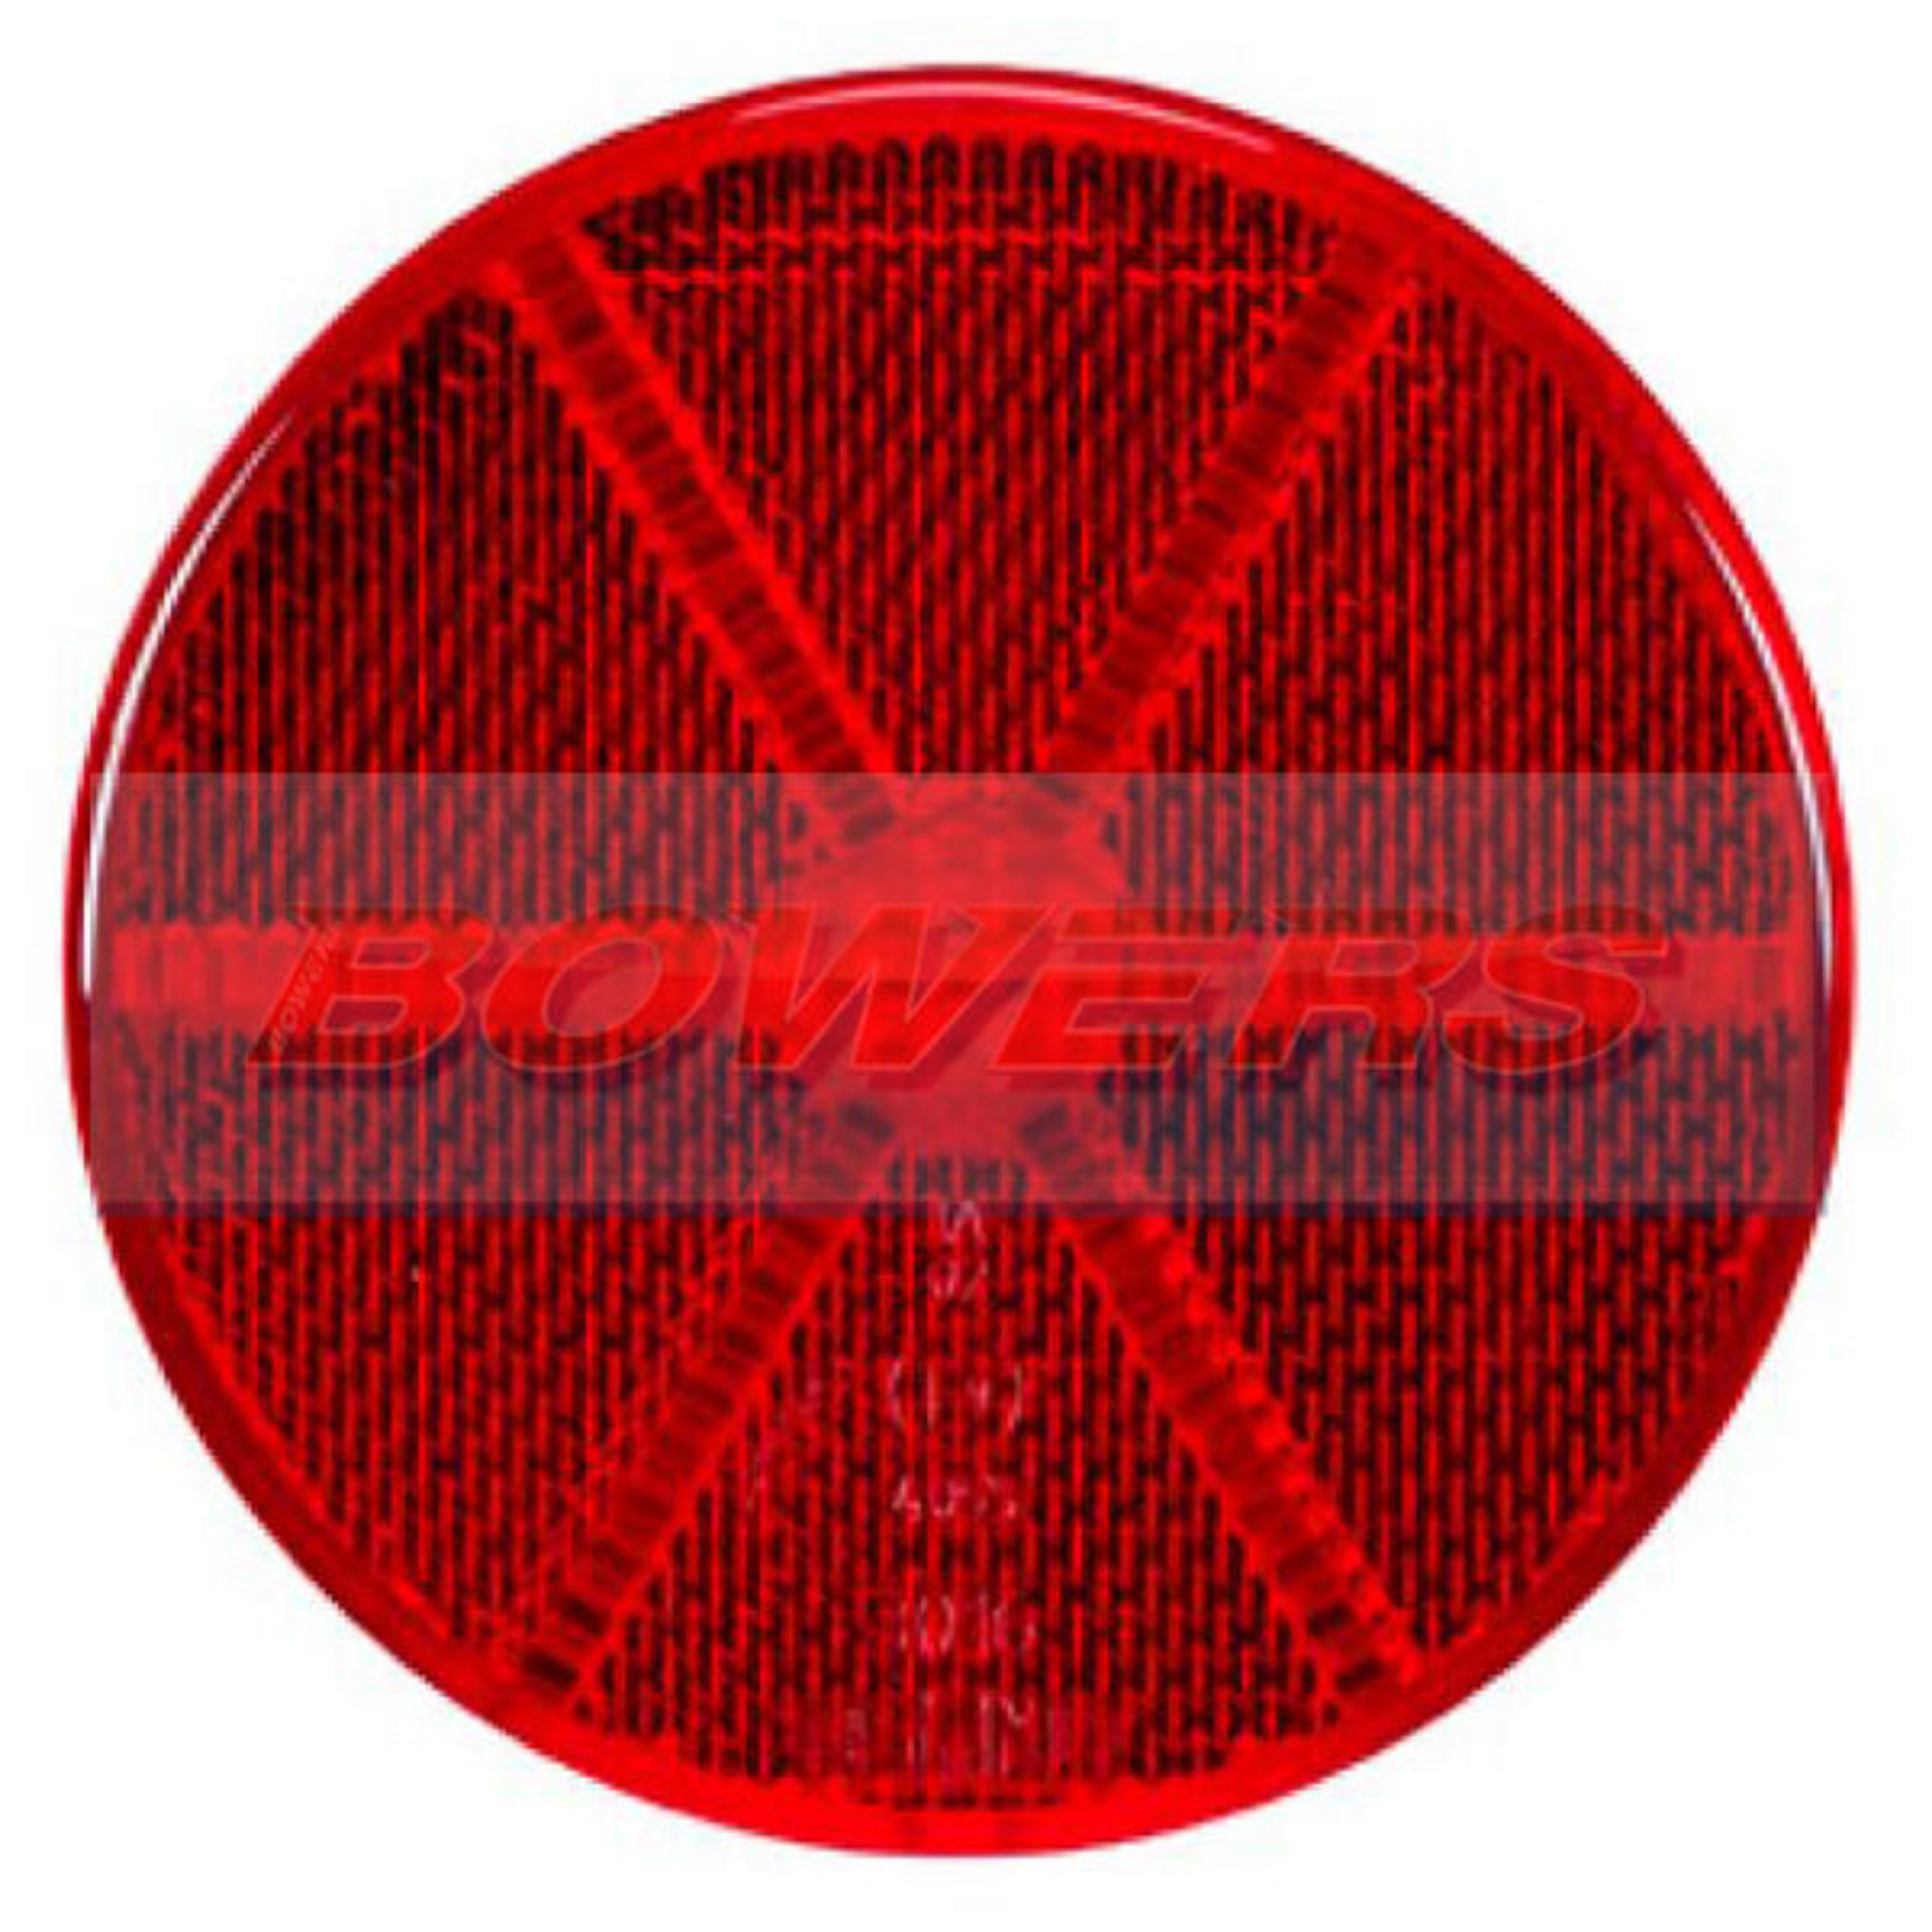 Beclen Harp 8 pcs Motorcycle Rear Reflector Set Red Light Bike Reflector Car Reflector Disk